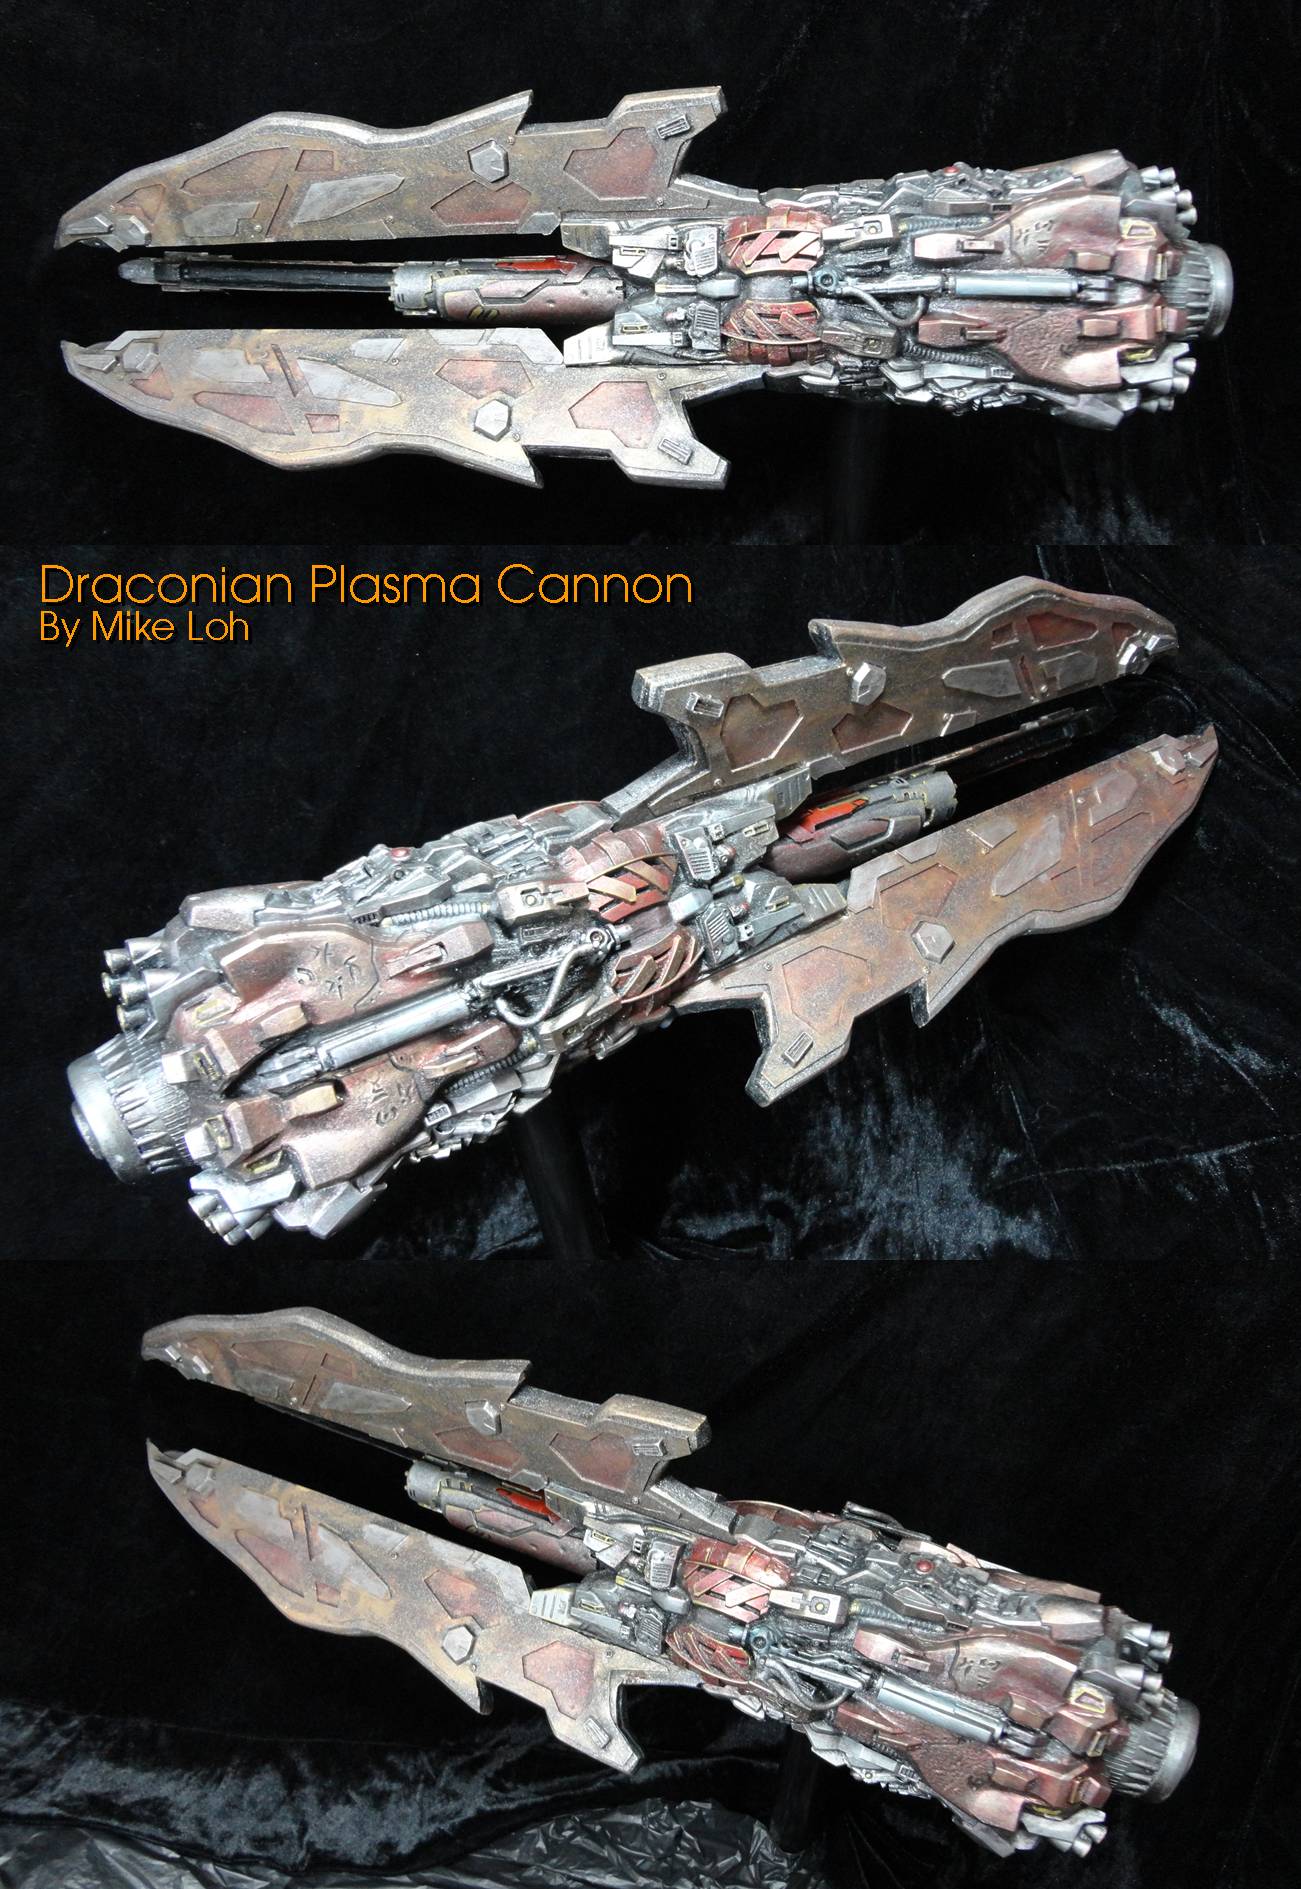 the_draconian_plasma_cannon_03_by_uratz_studios-d51xido.jpg